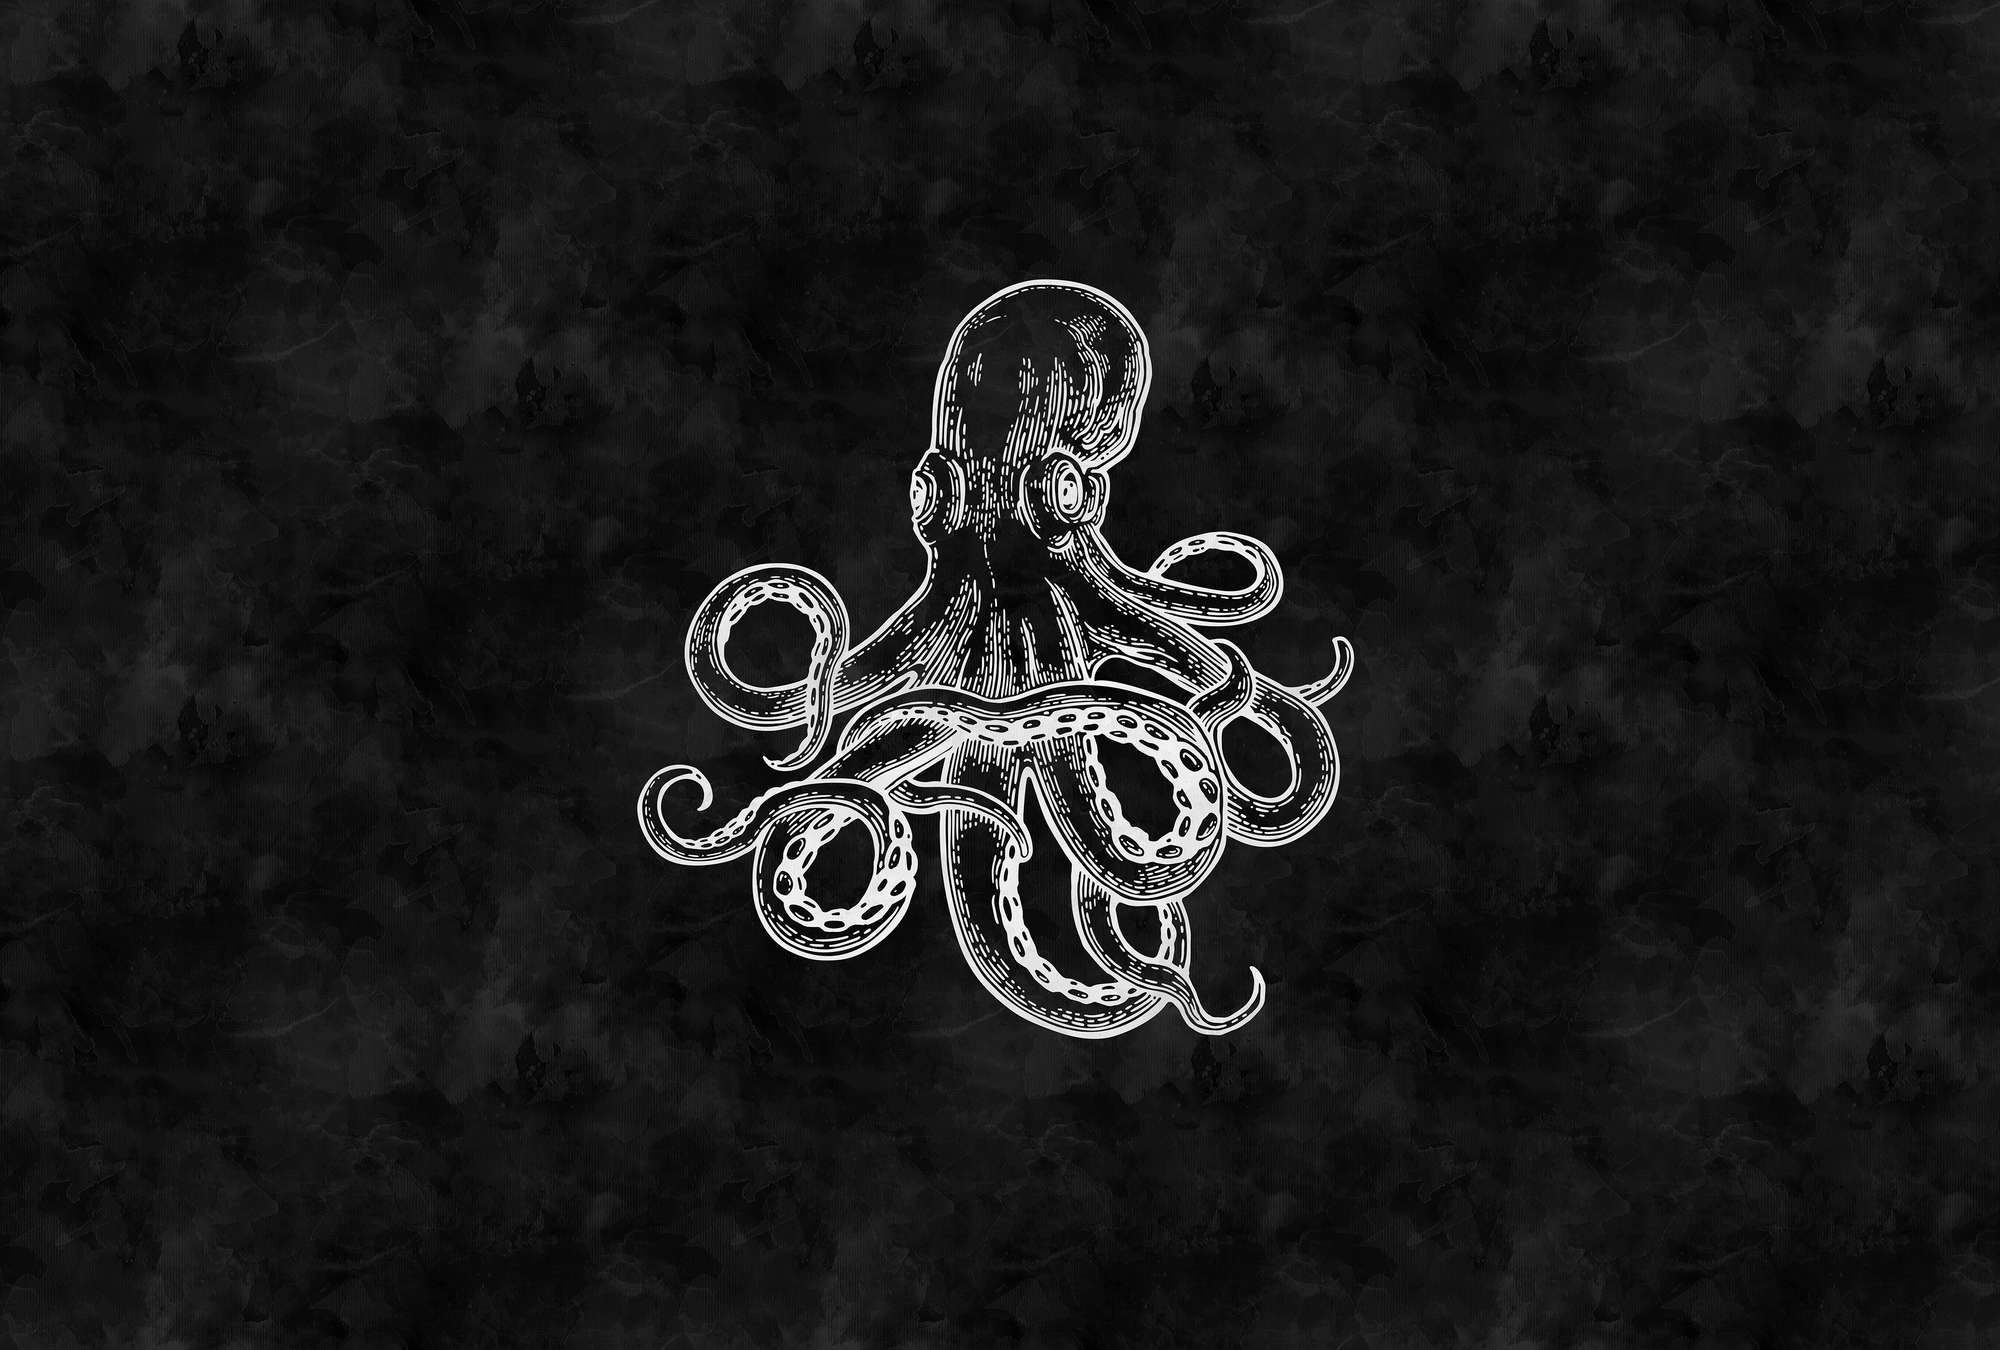             Schwarz-Weiße Fototapete Oktopus & Tafel-Look
        